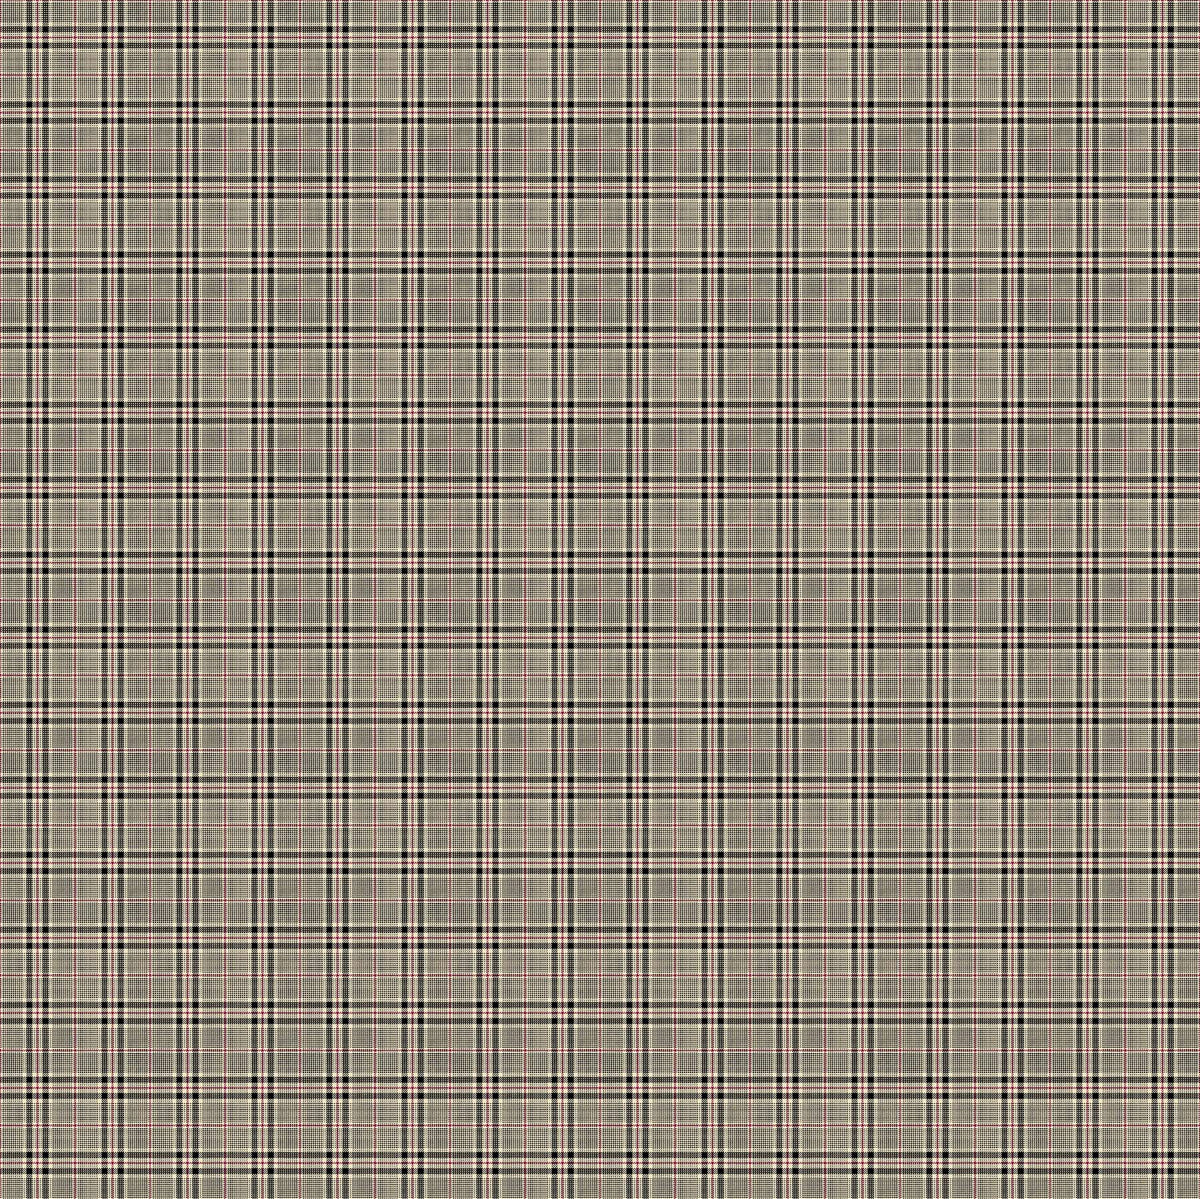 Cat Tales Quilt Fabric - Small Plaid in Beige Multi - 24533-12